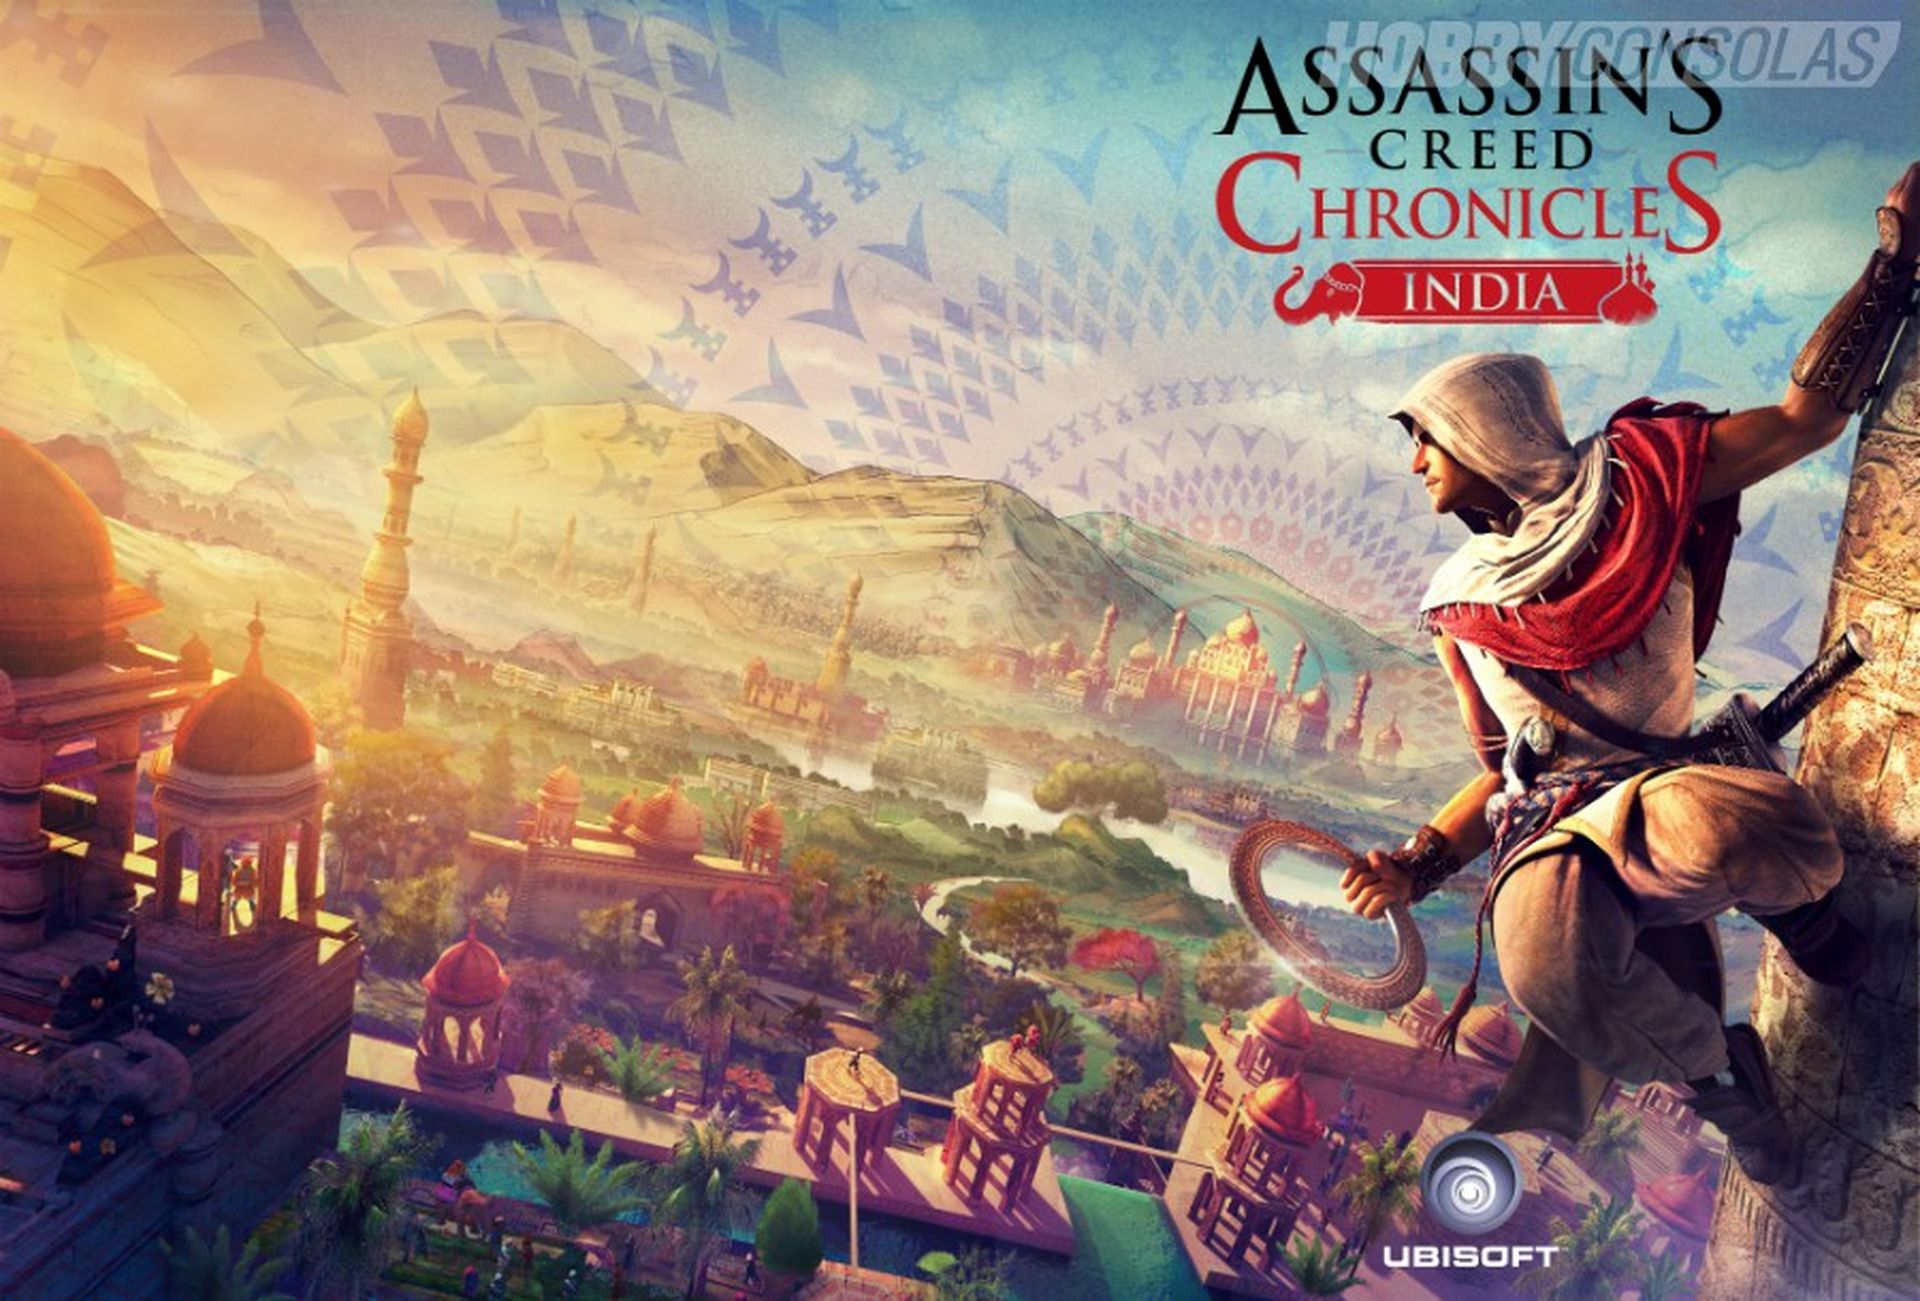 Imágenes de Assassin&#039;s Creed Chronicles Rusia y Assassin&#039;s Creed Chronicles India